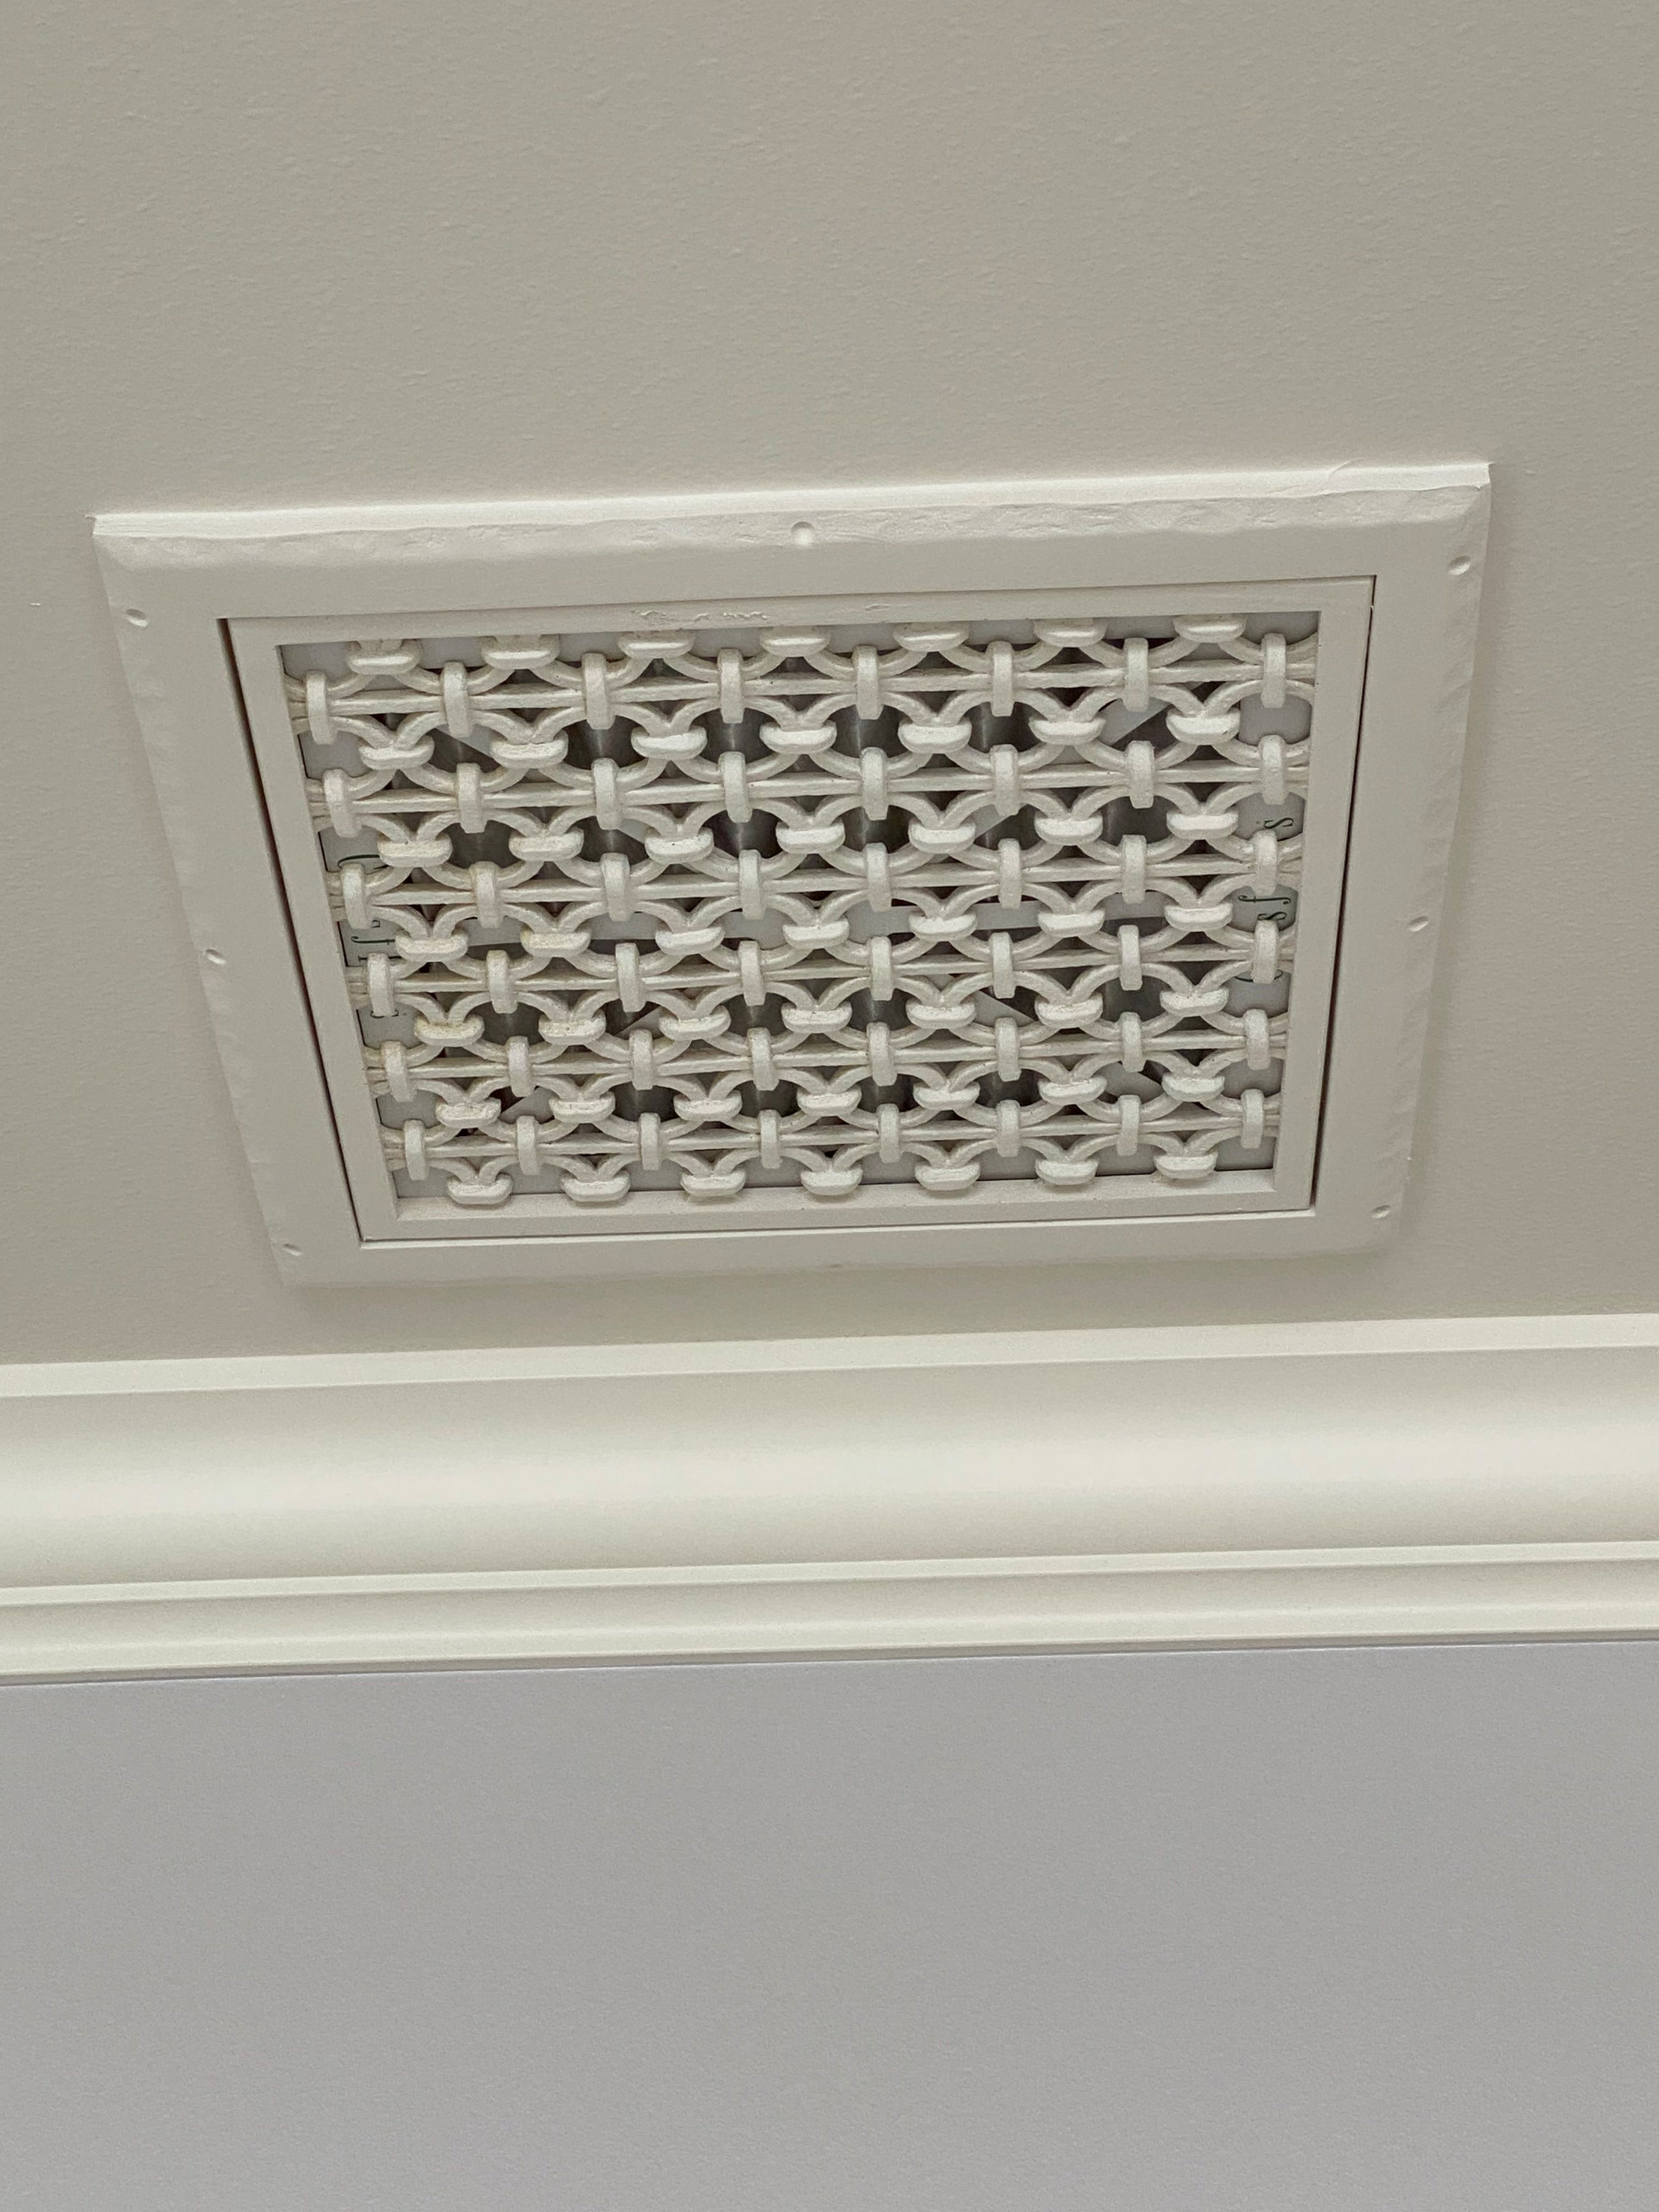 Interesting painted ceiling return air vent